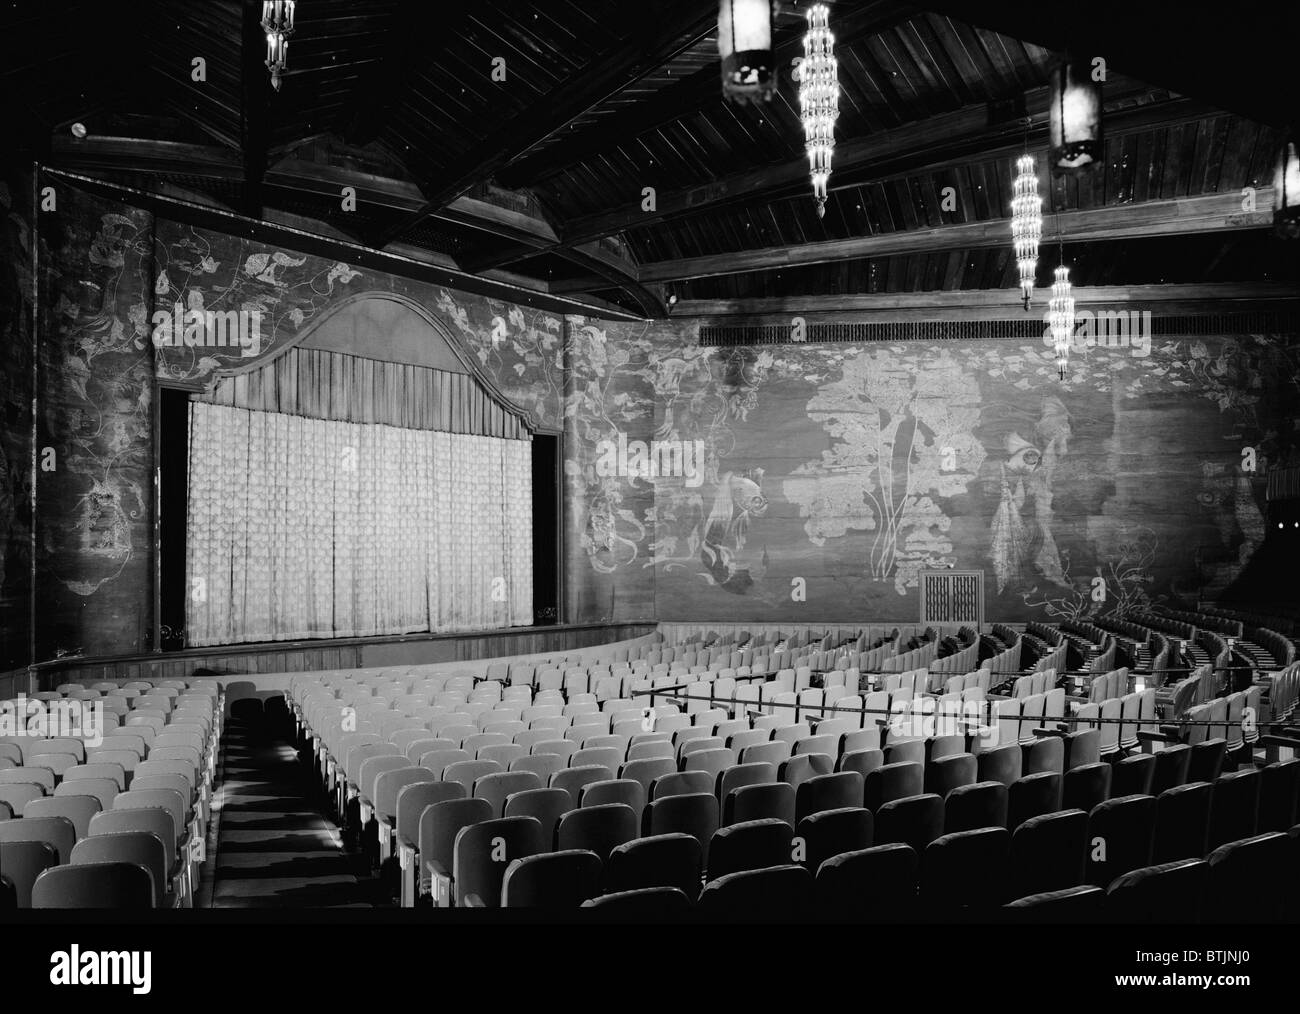 Kinos, die Paramount Theater, Interieur, Baujahr 1926, Sunrise Avenue & North County Road, Palm Beach, Florida, ca. 1970er Jahre. Stockfoto